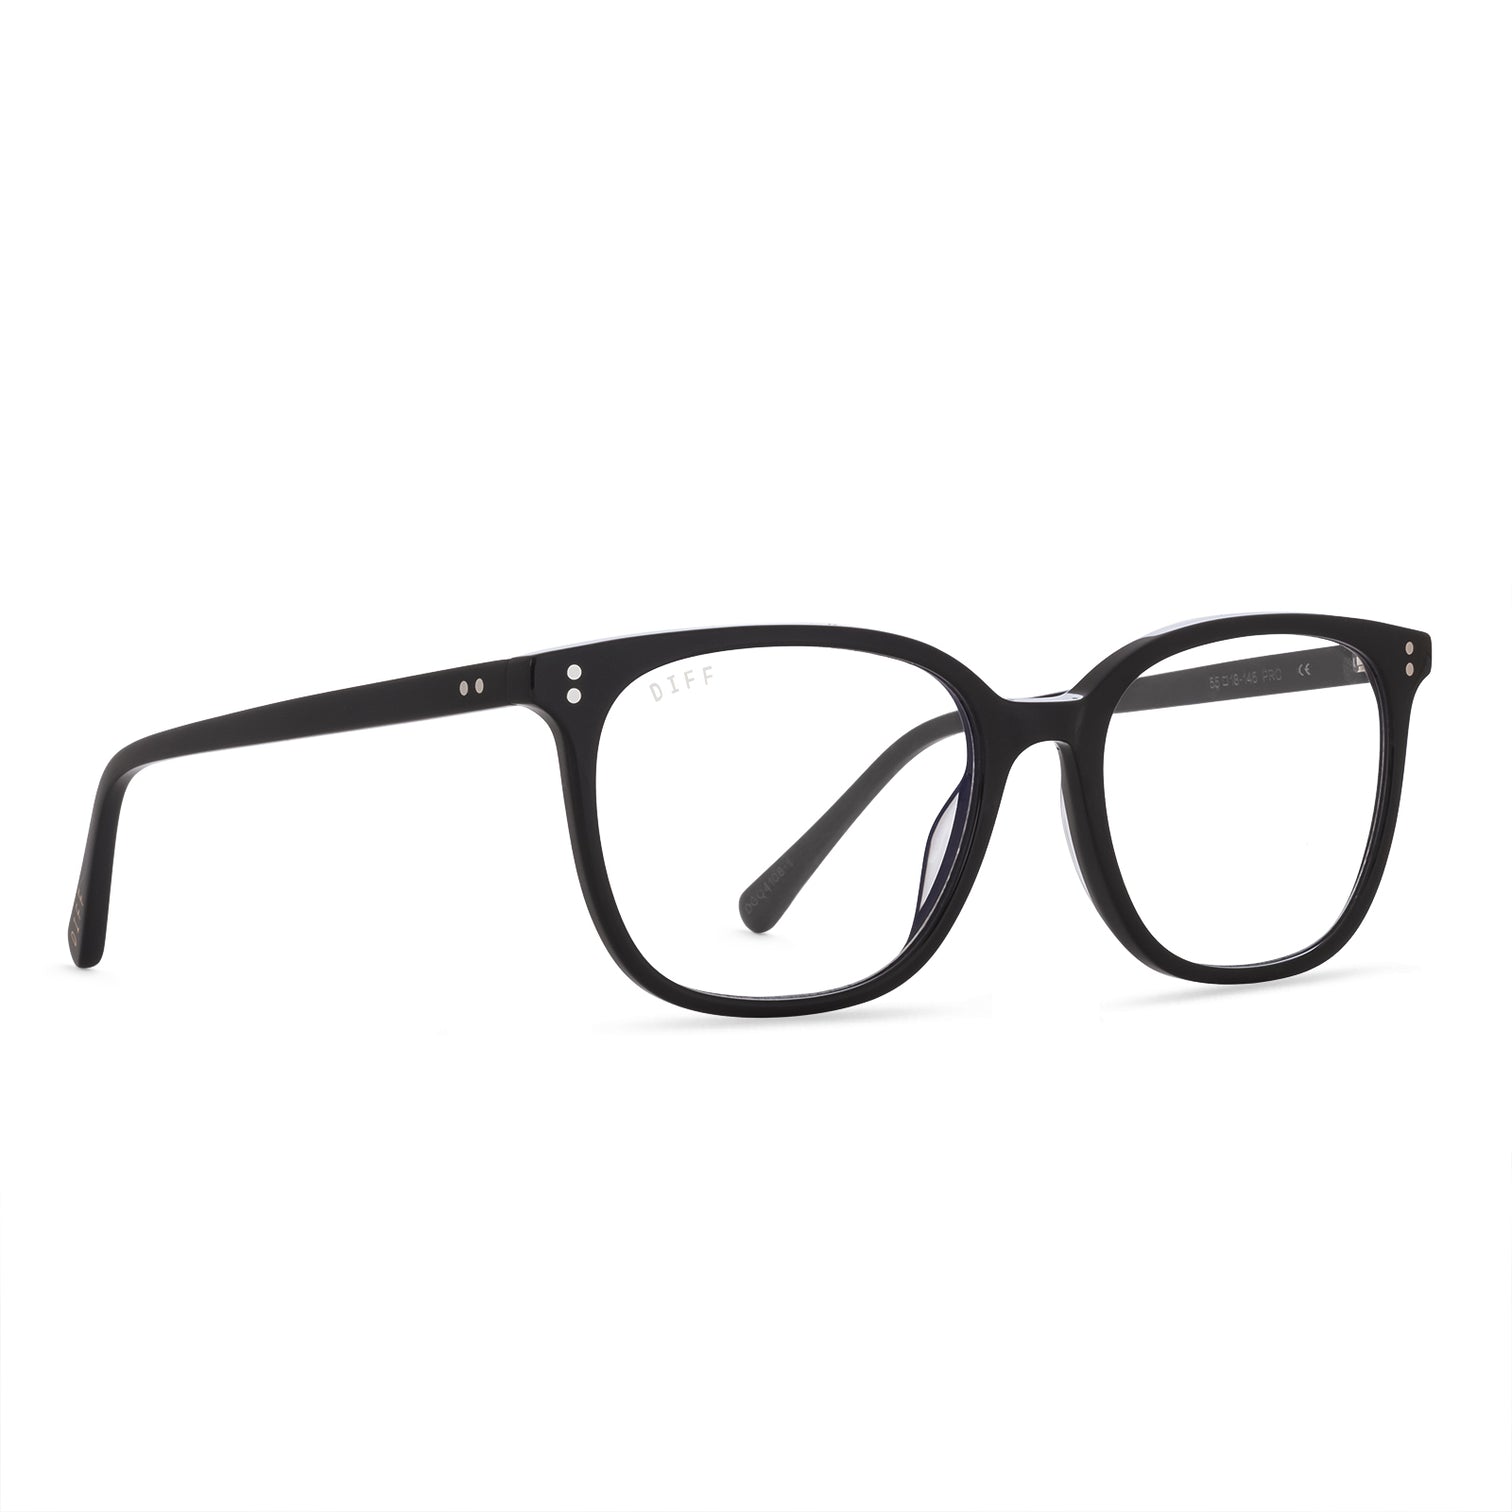 Clarke Square Glasses | Black & Clear Blue Light Technology | DIFF Eyewear